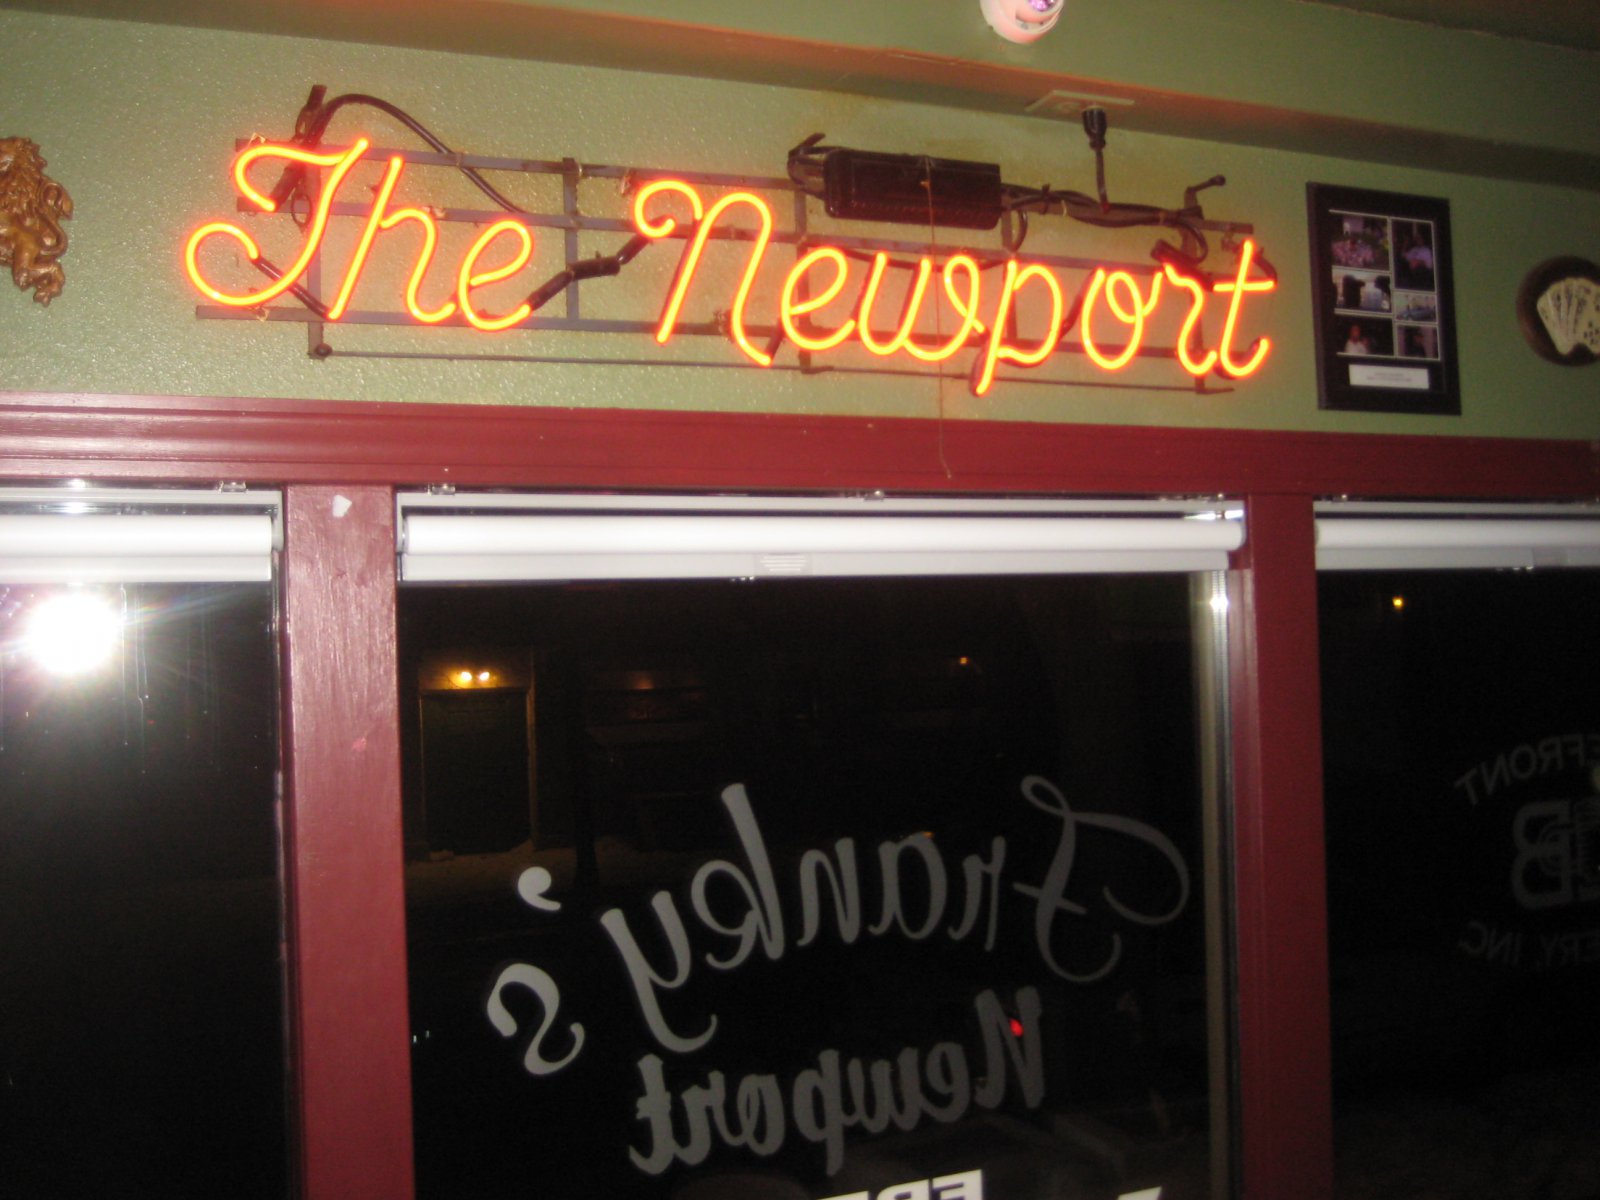 The Newport